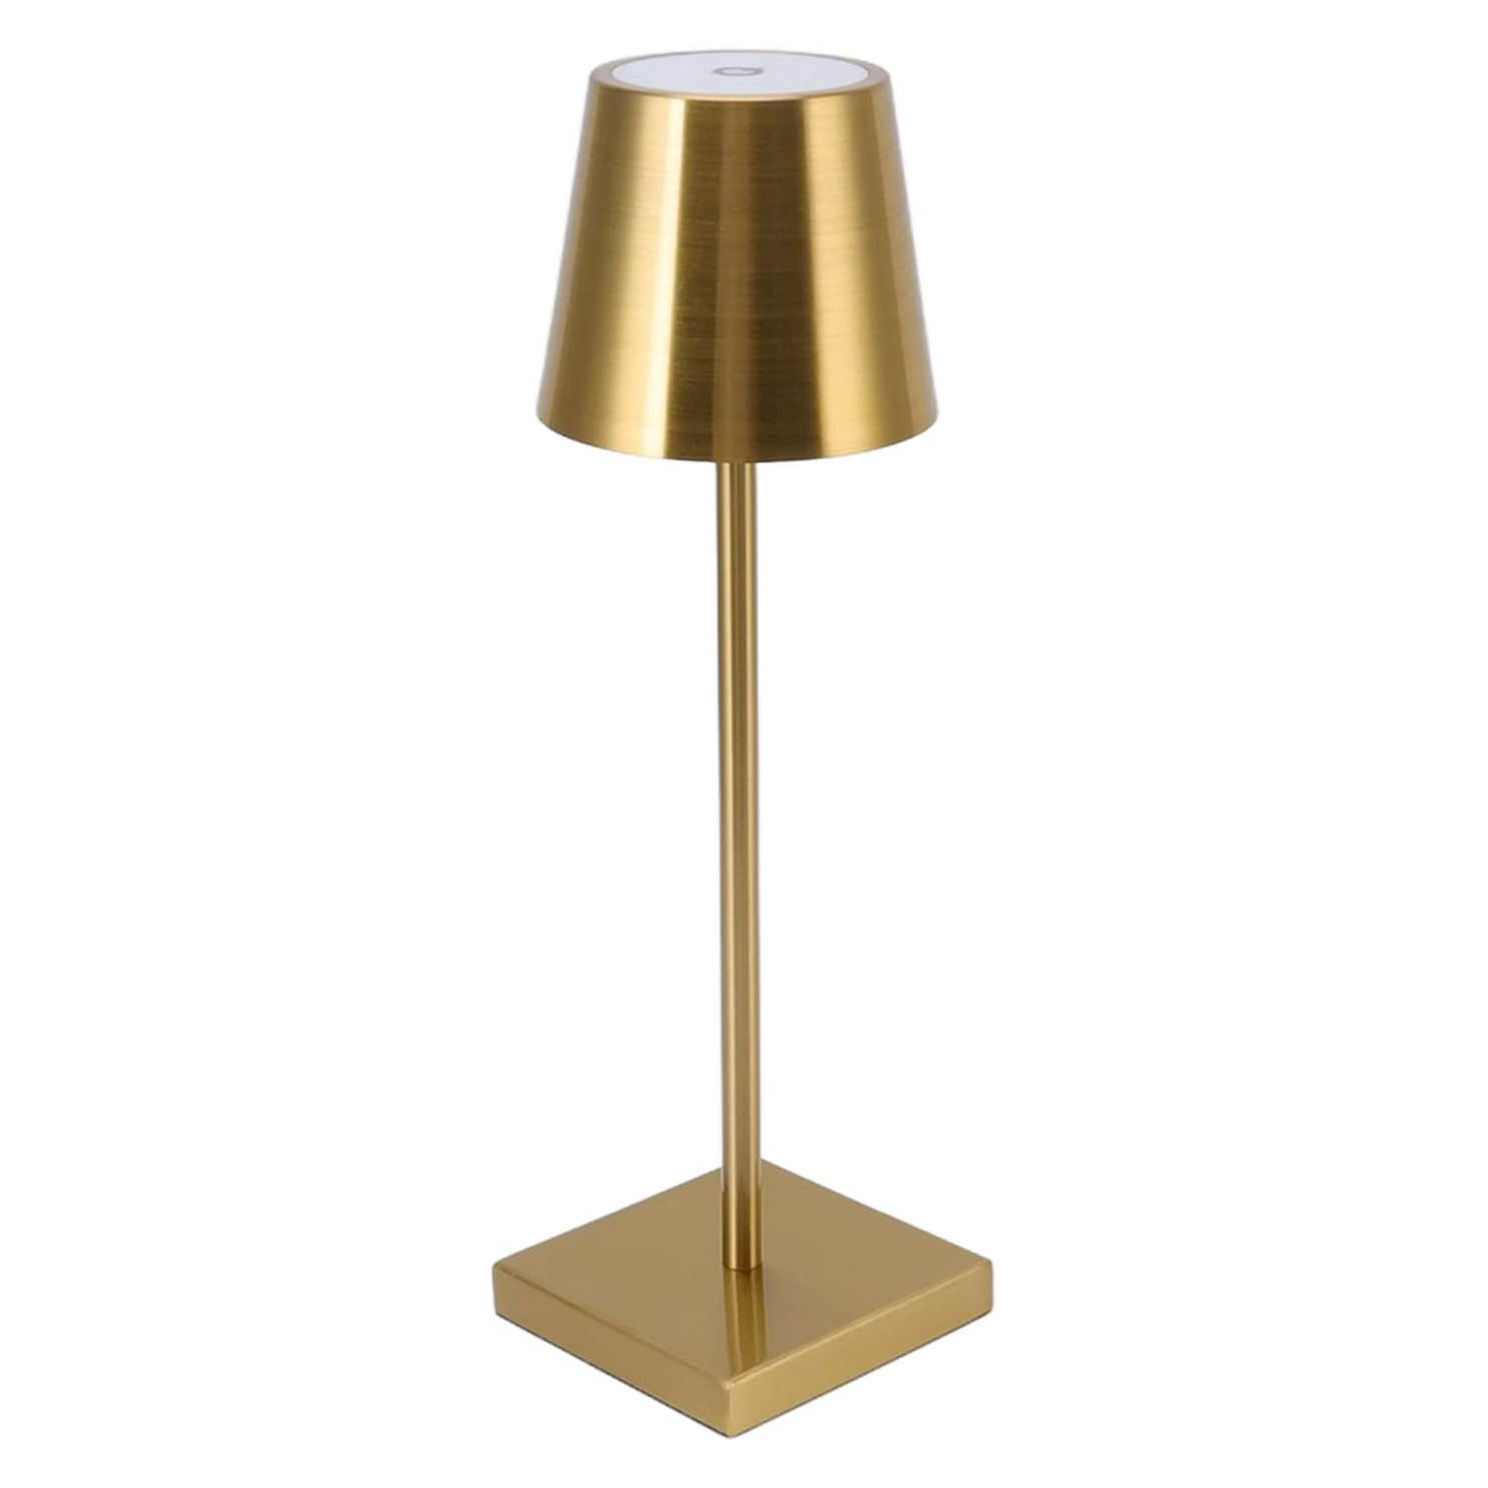 Luxury Designer LED Metal Tall Table Lamp Cordless Touch Sensor Night Light (Gold)